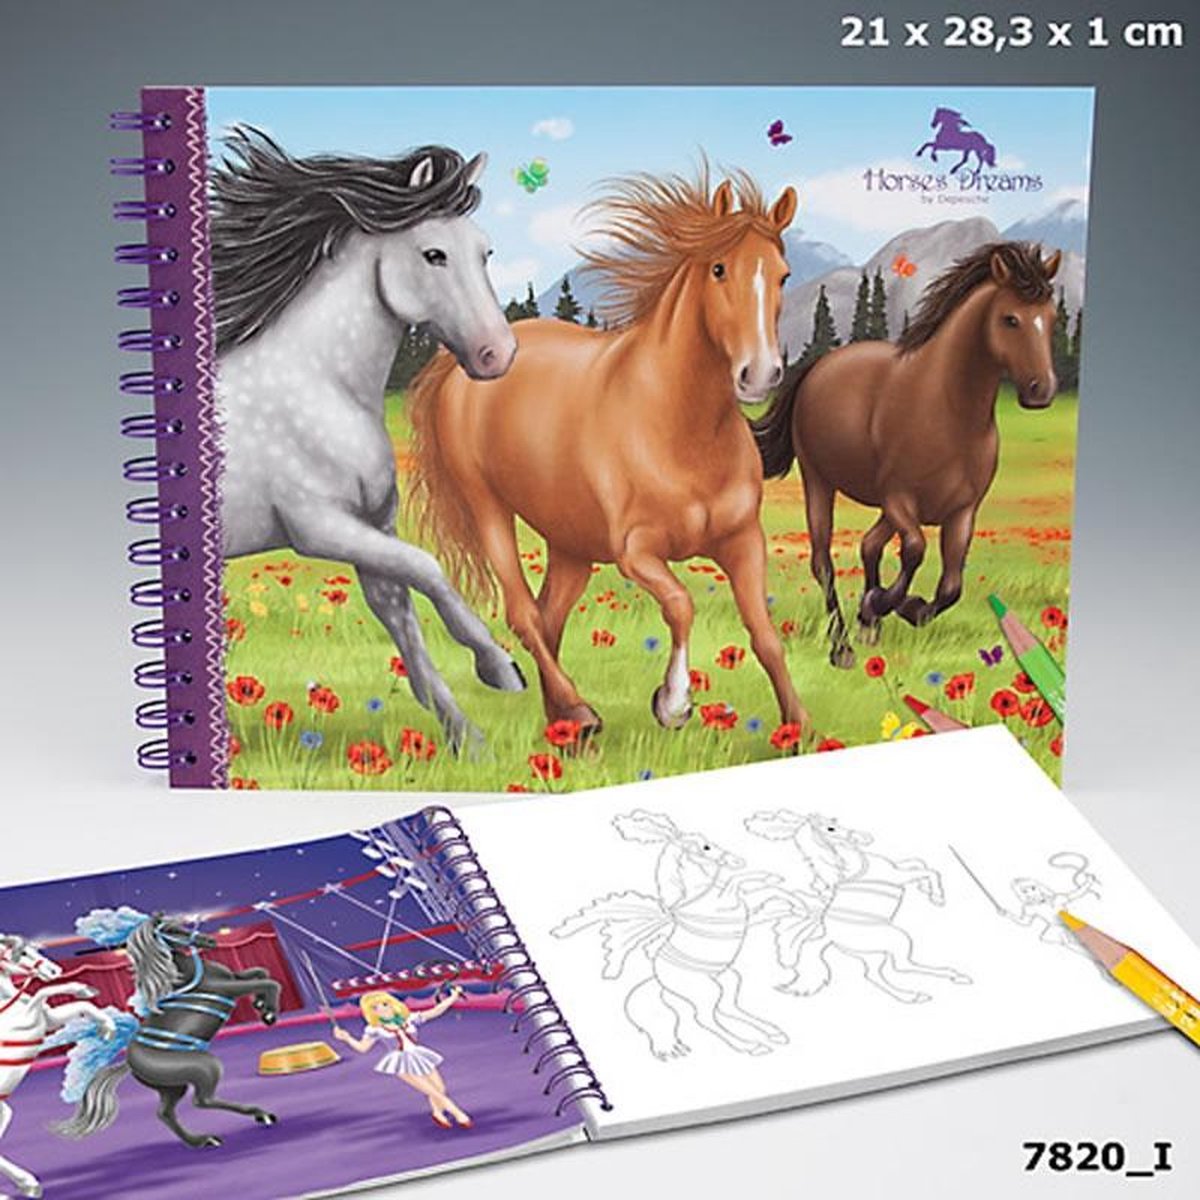 Topmodel Horses Dreams kleurboek | bol.com